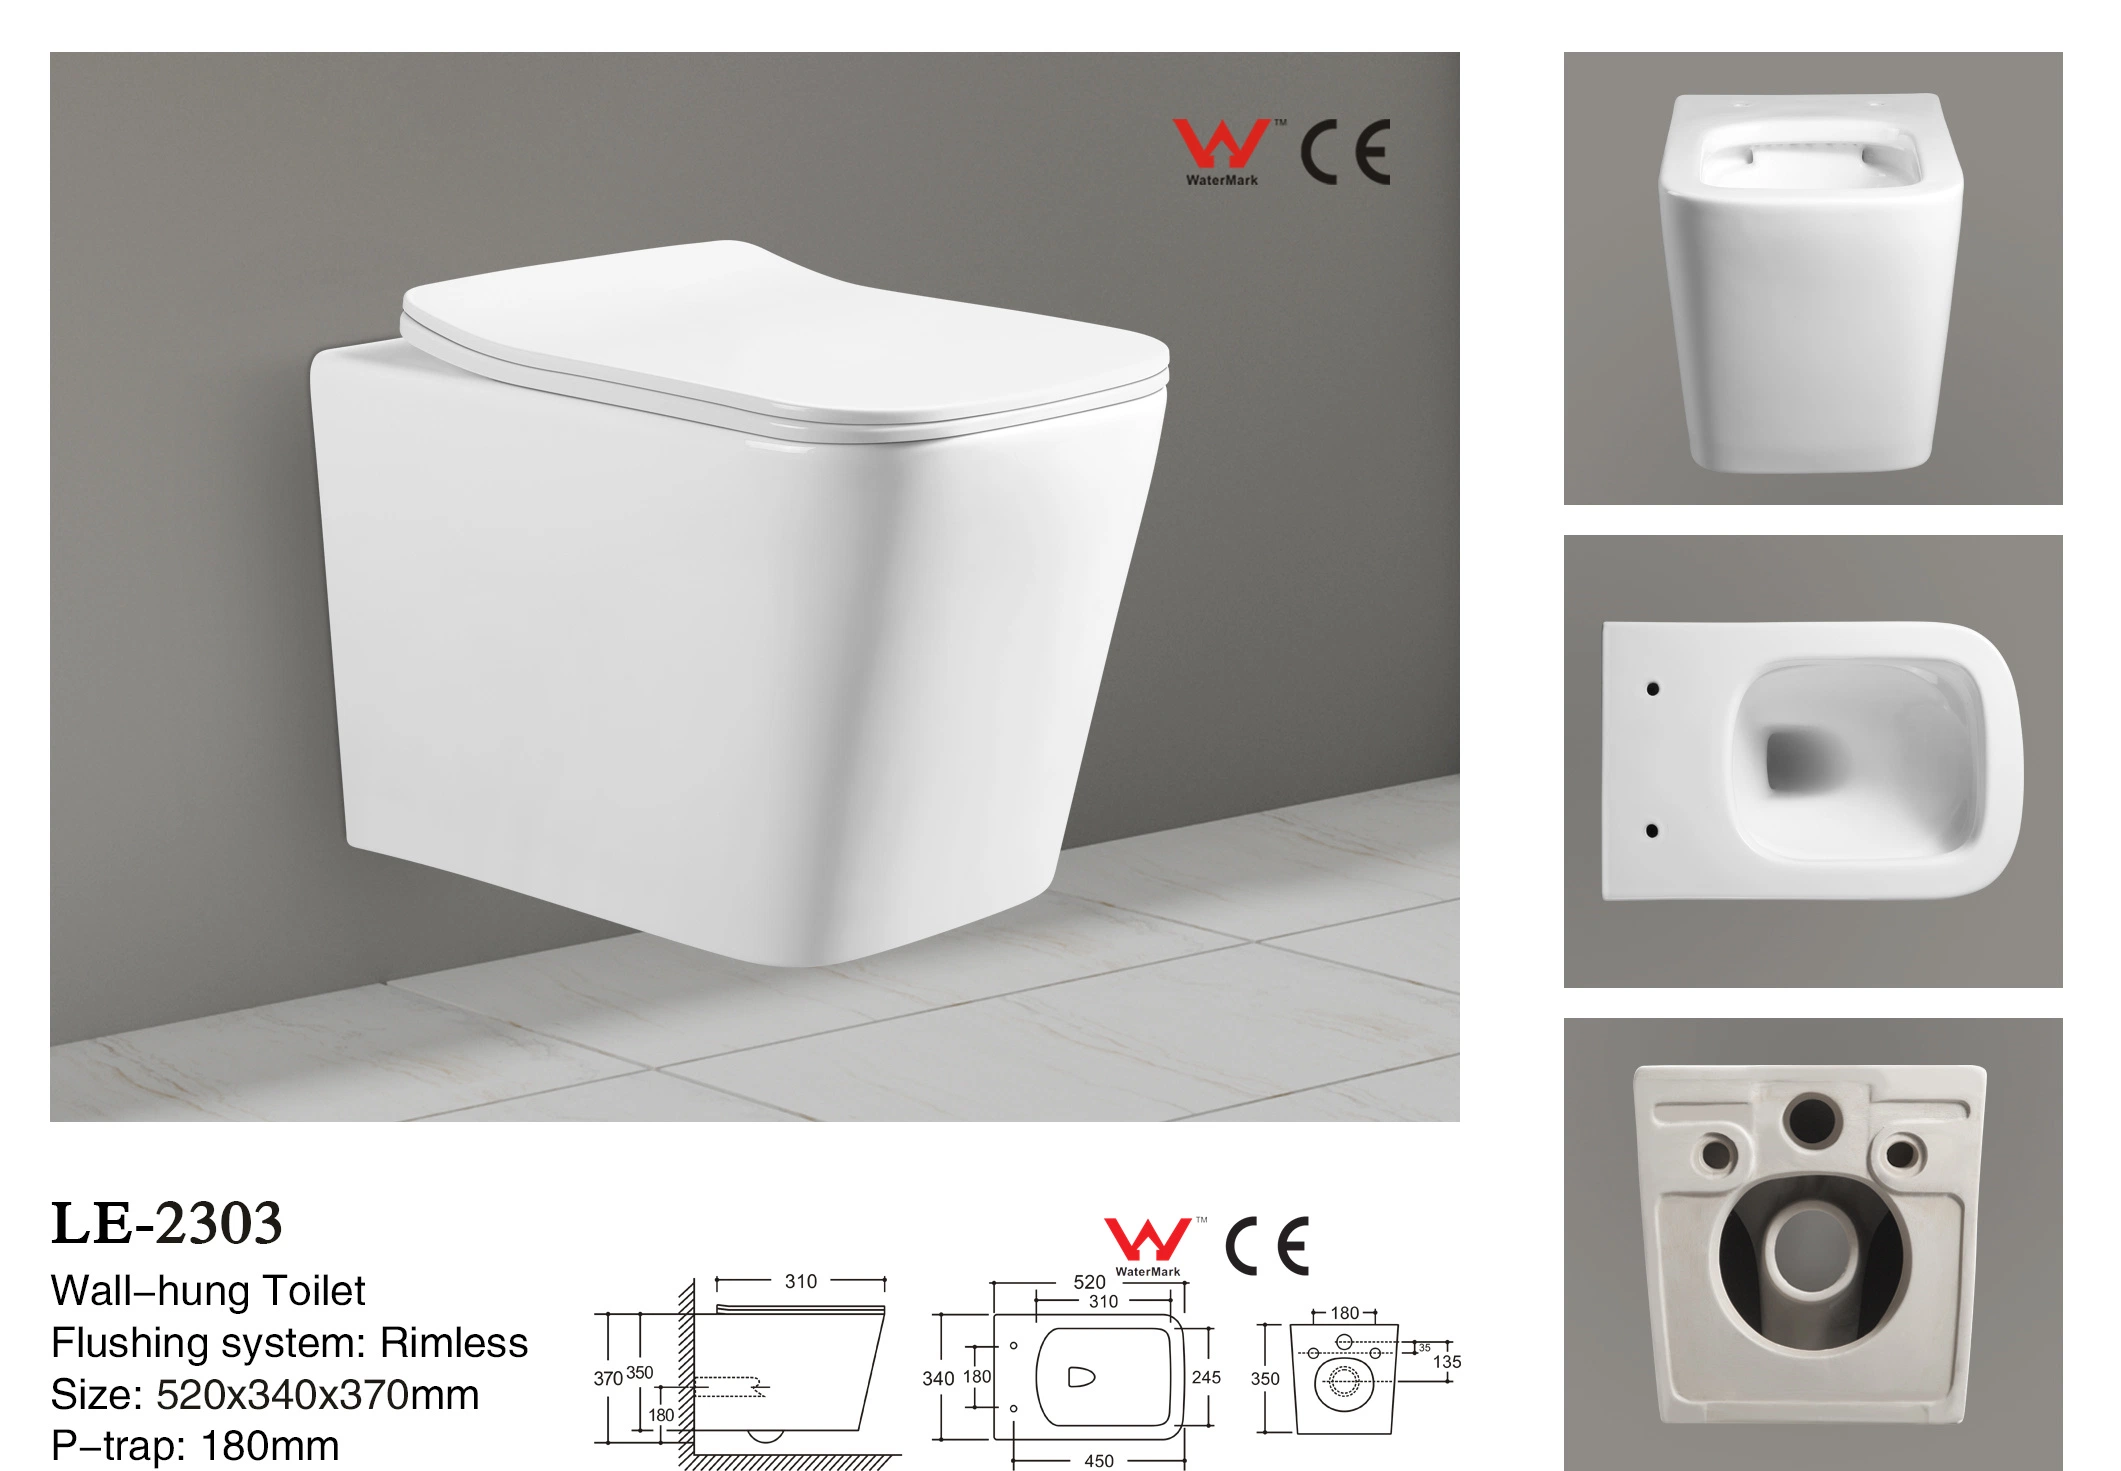 European Standard Ceramica Wall Hung Water Closet Mounted Toilet with Bidet 2303-Oiq